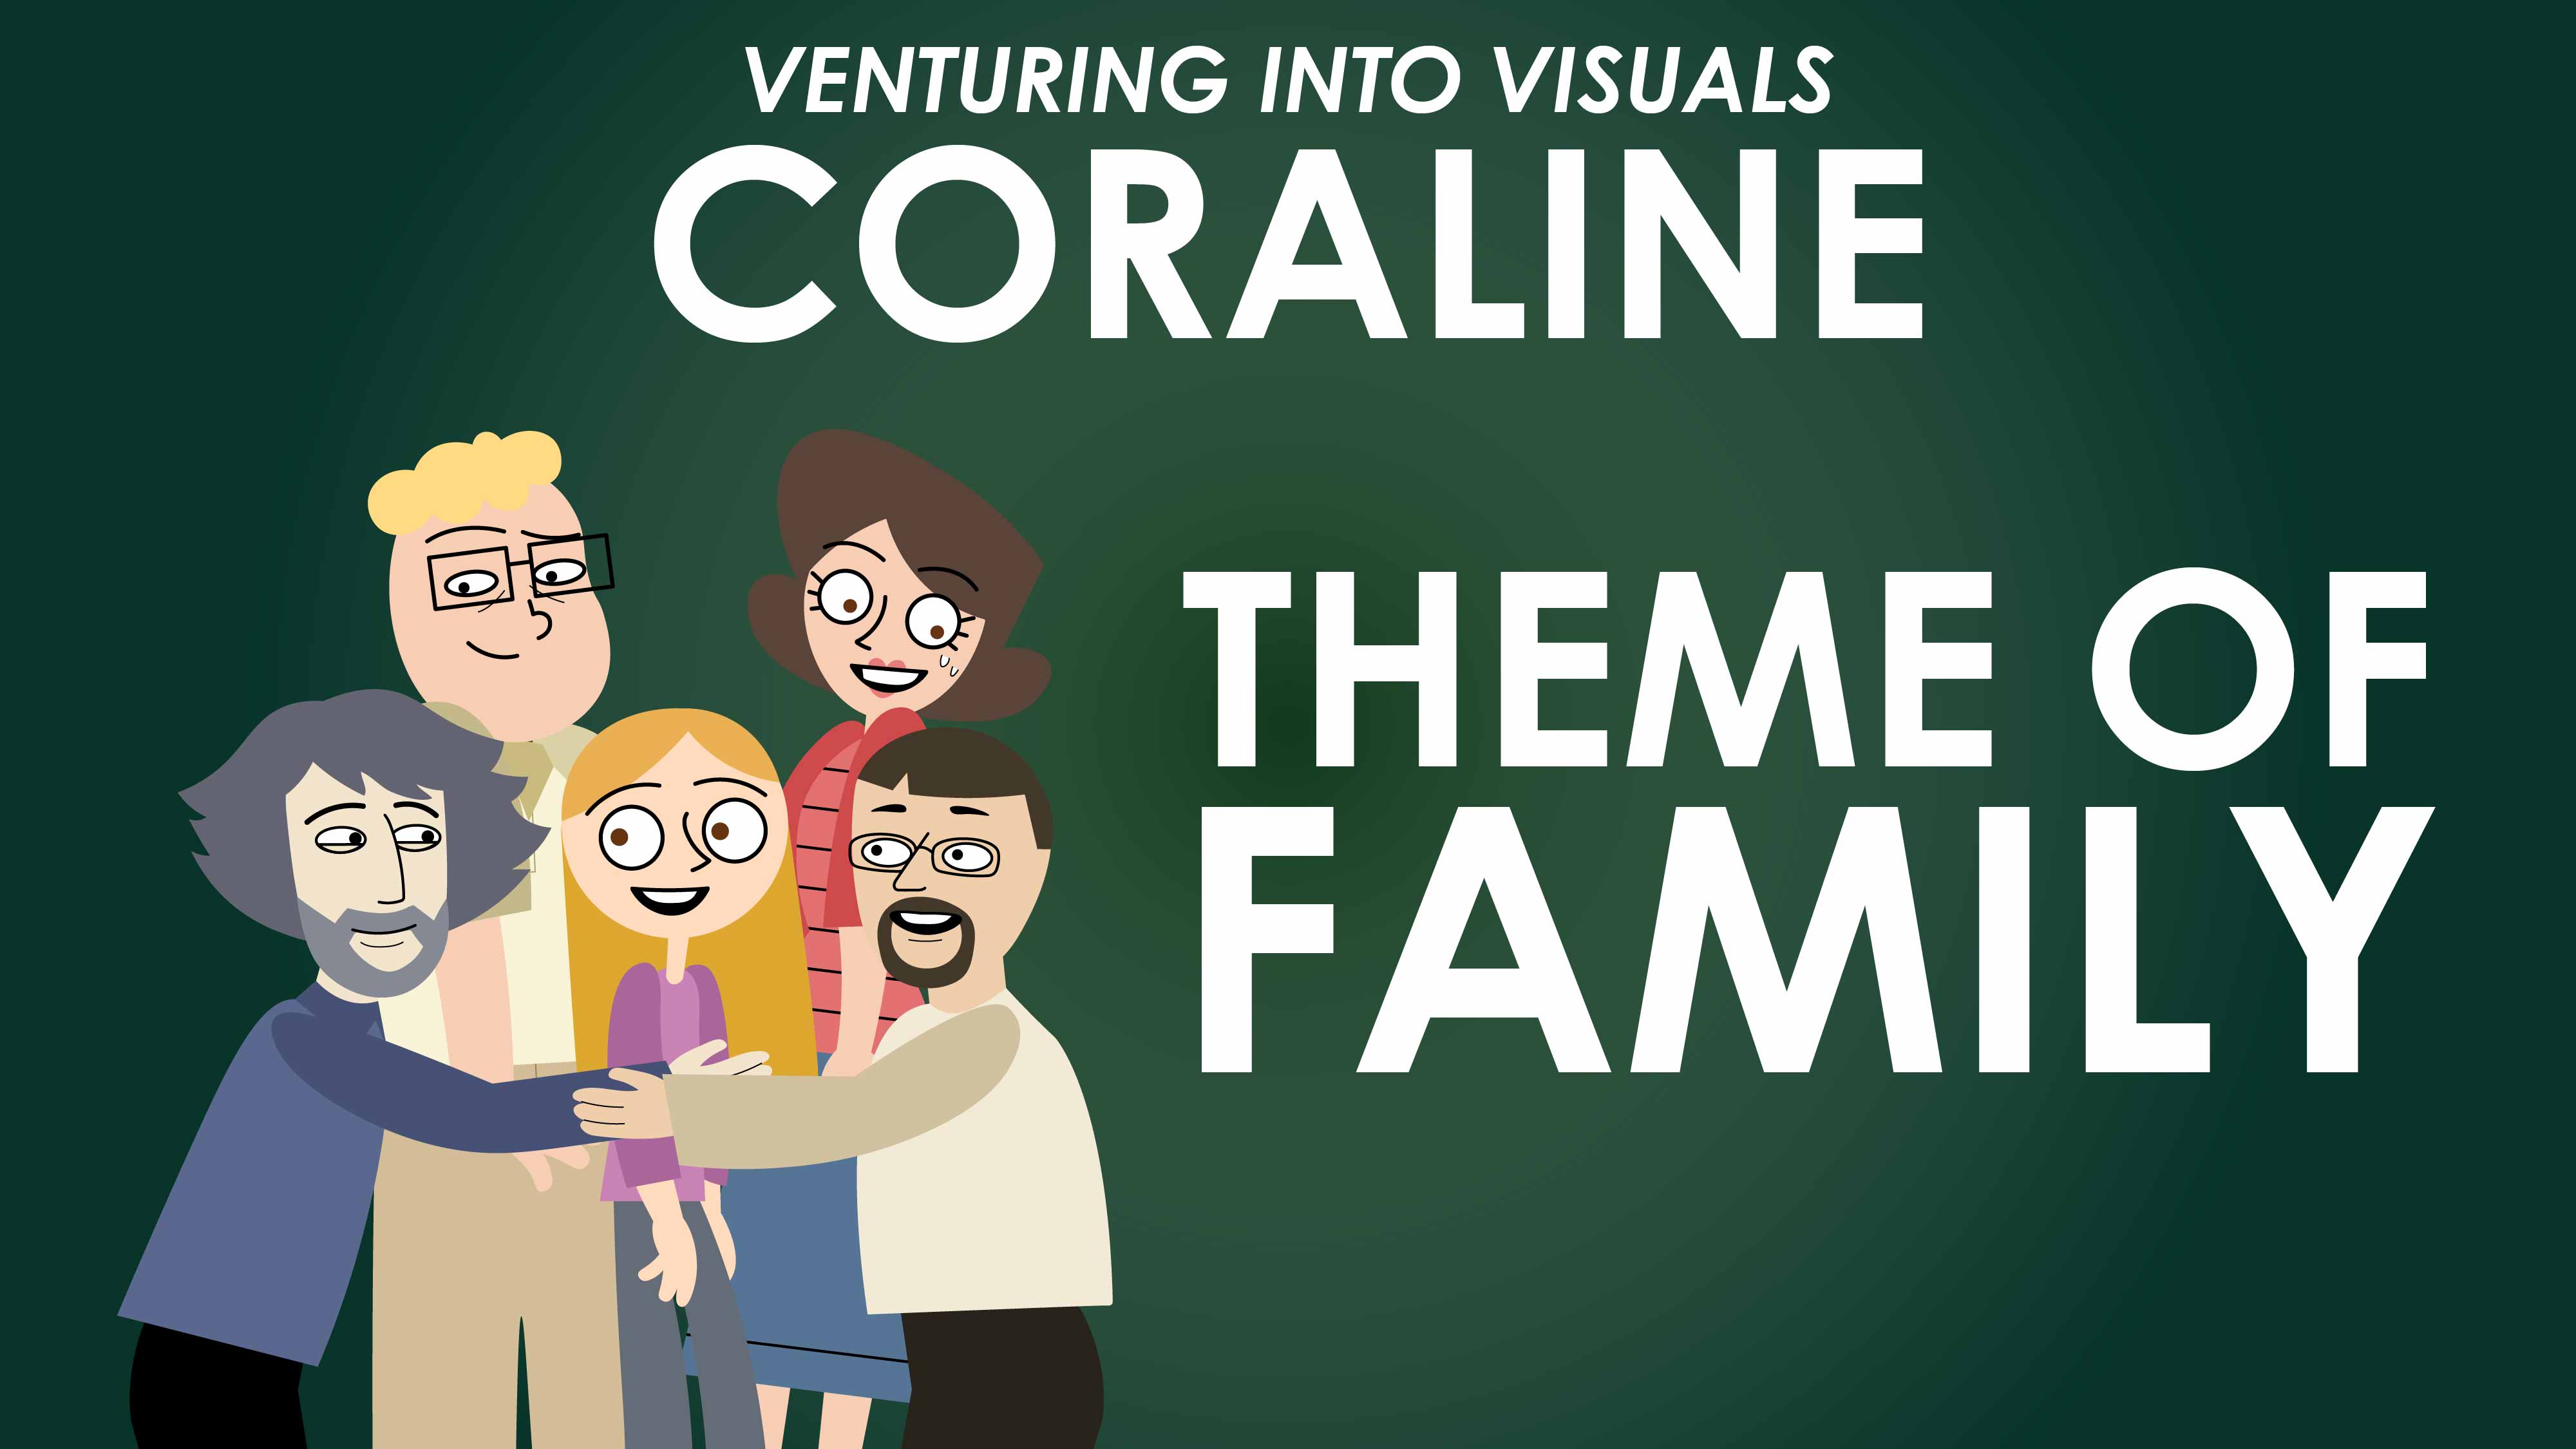 Coraline - Neil Gaiman - Theme of Family - Venturing Into Visuals Series